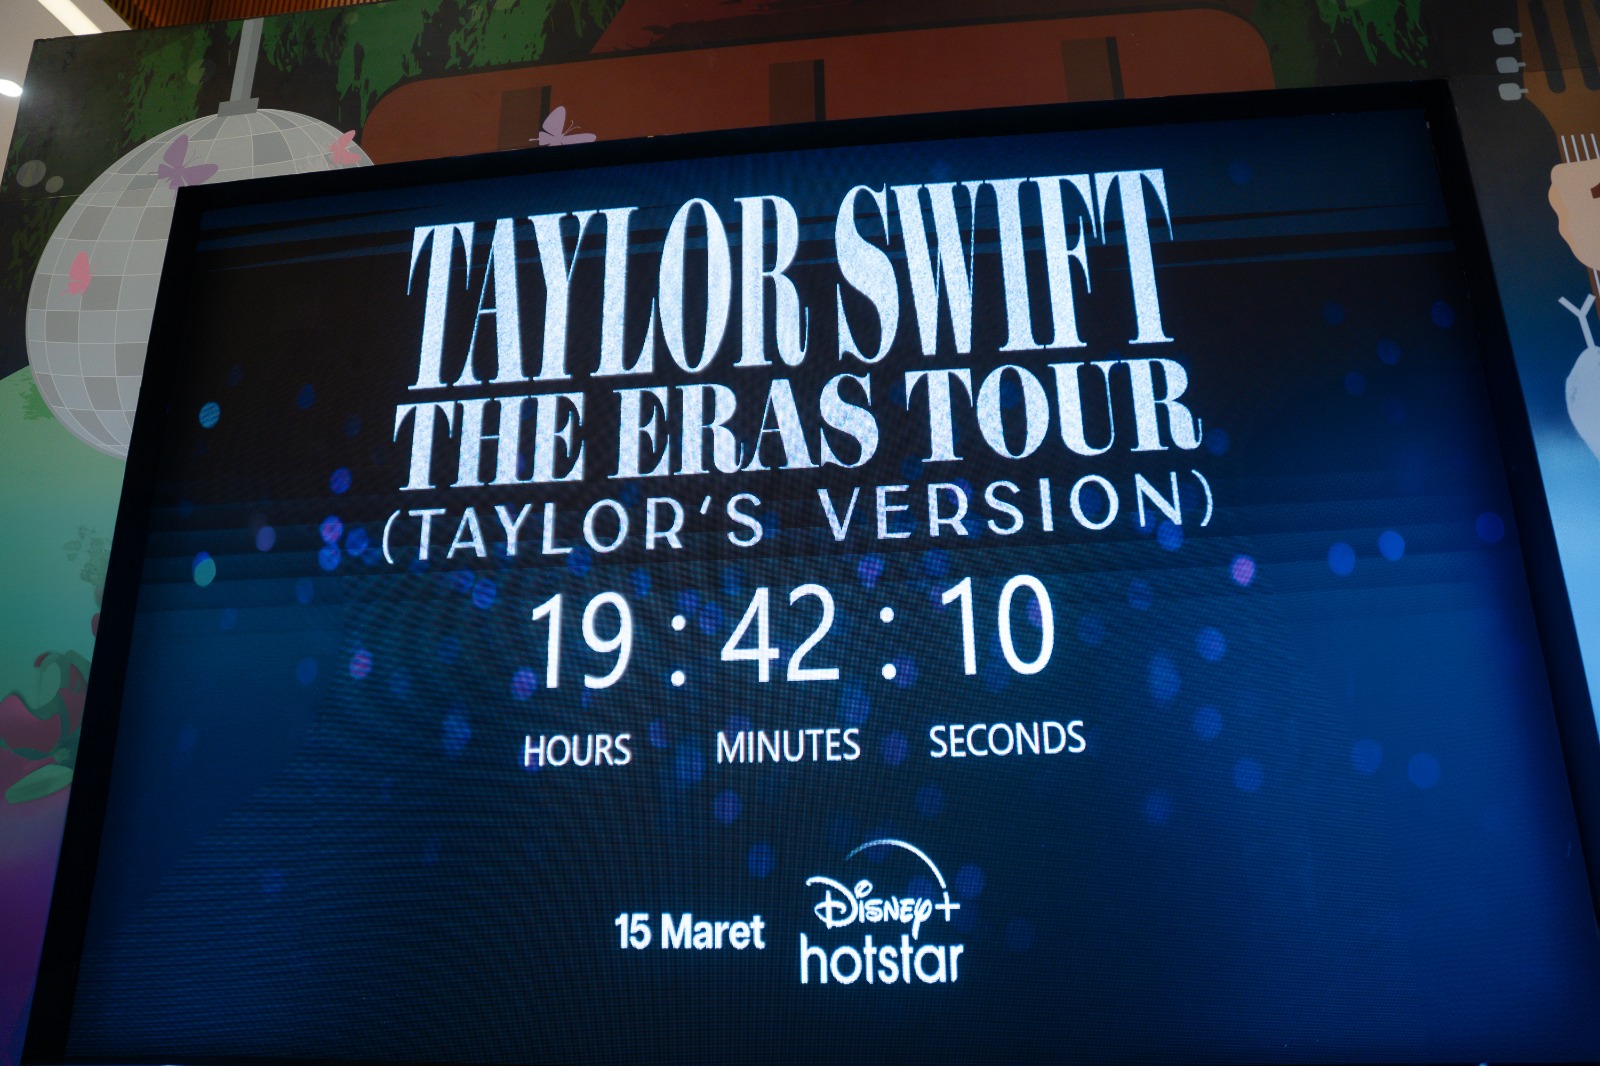 Film Konser Taylor Swift The Eras Tour Sudah Rilis Eksklusif di Disney Hotstar 